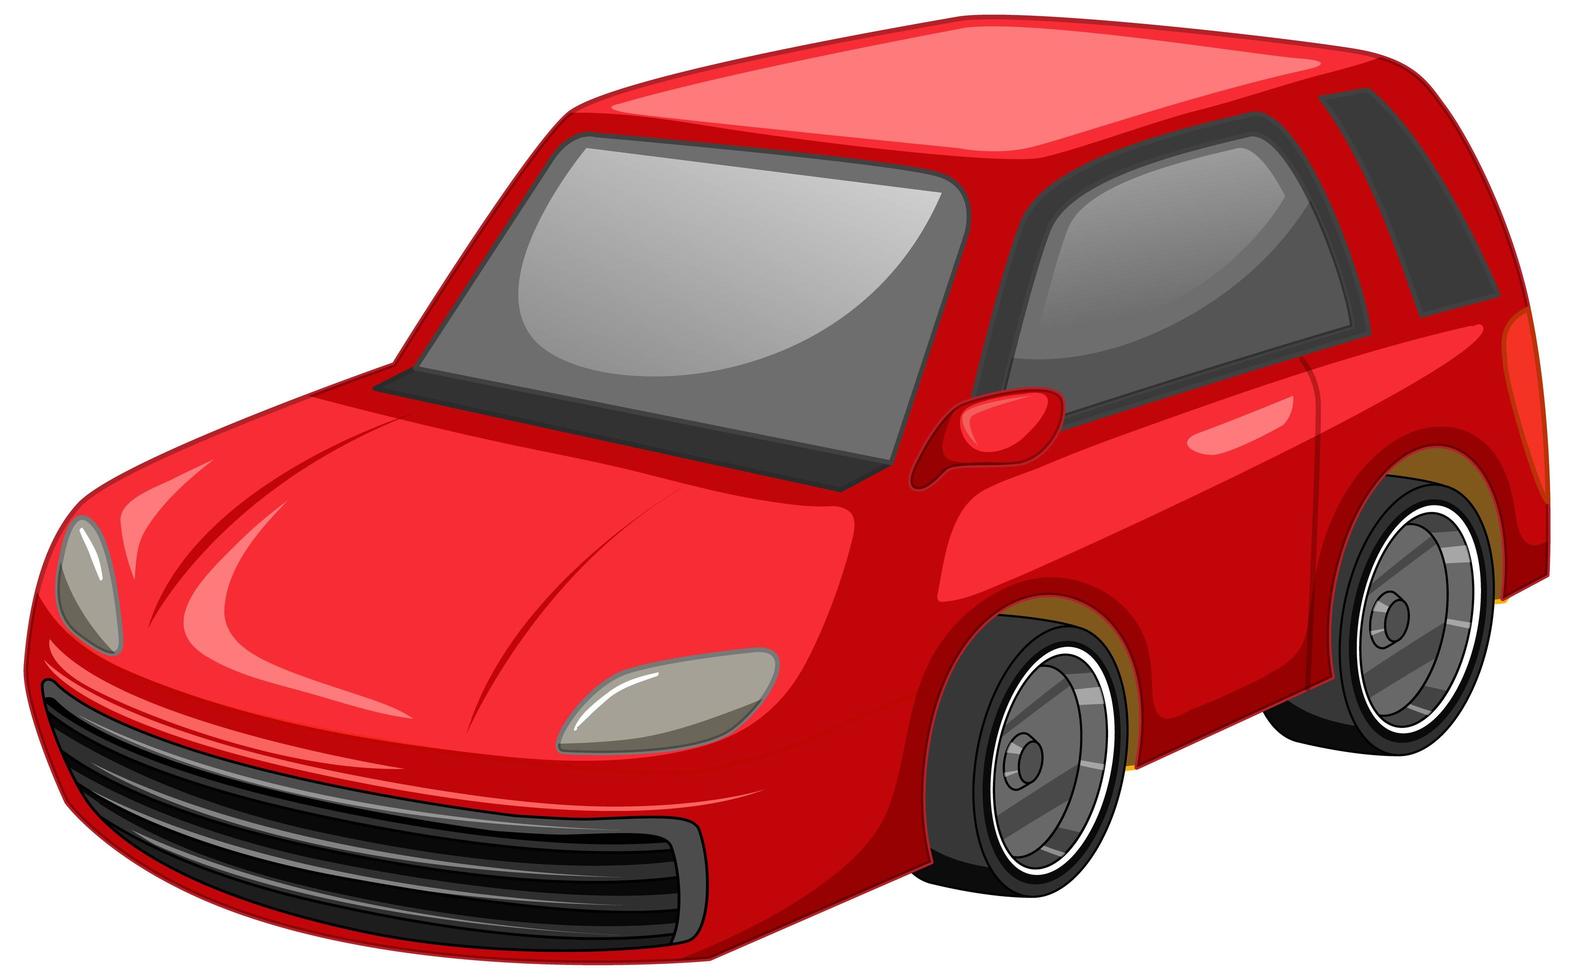 estilo de desenho animado de carro vermelho isolado no fundo branco vetor